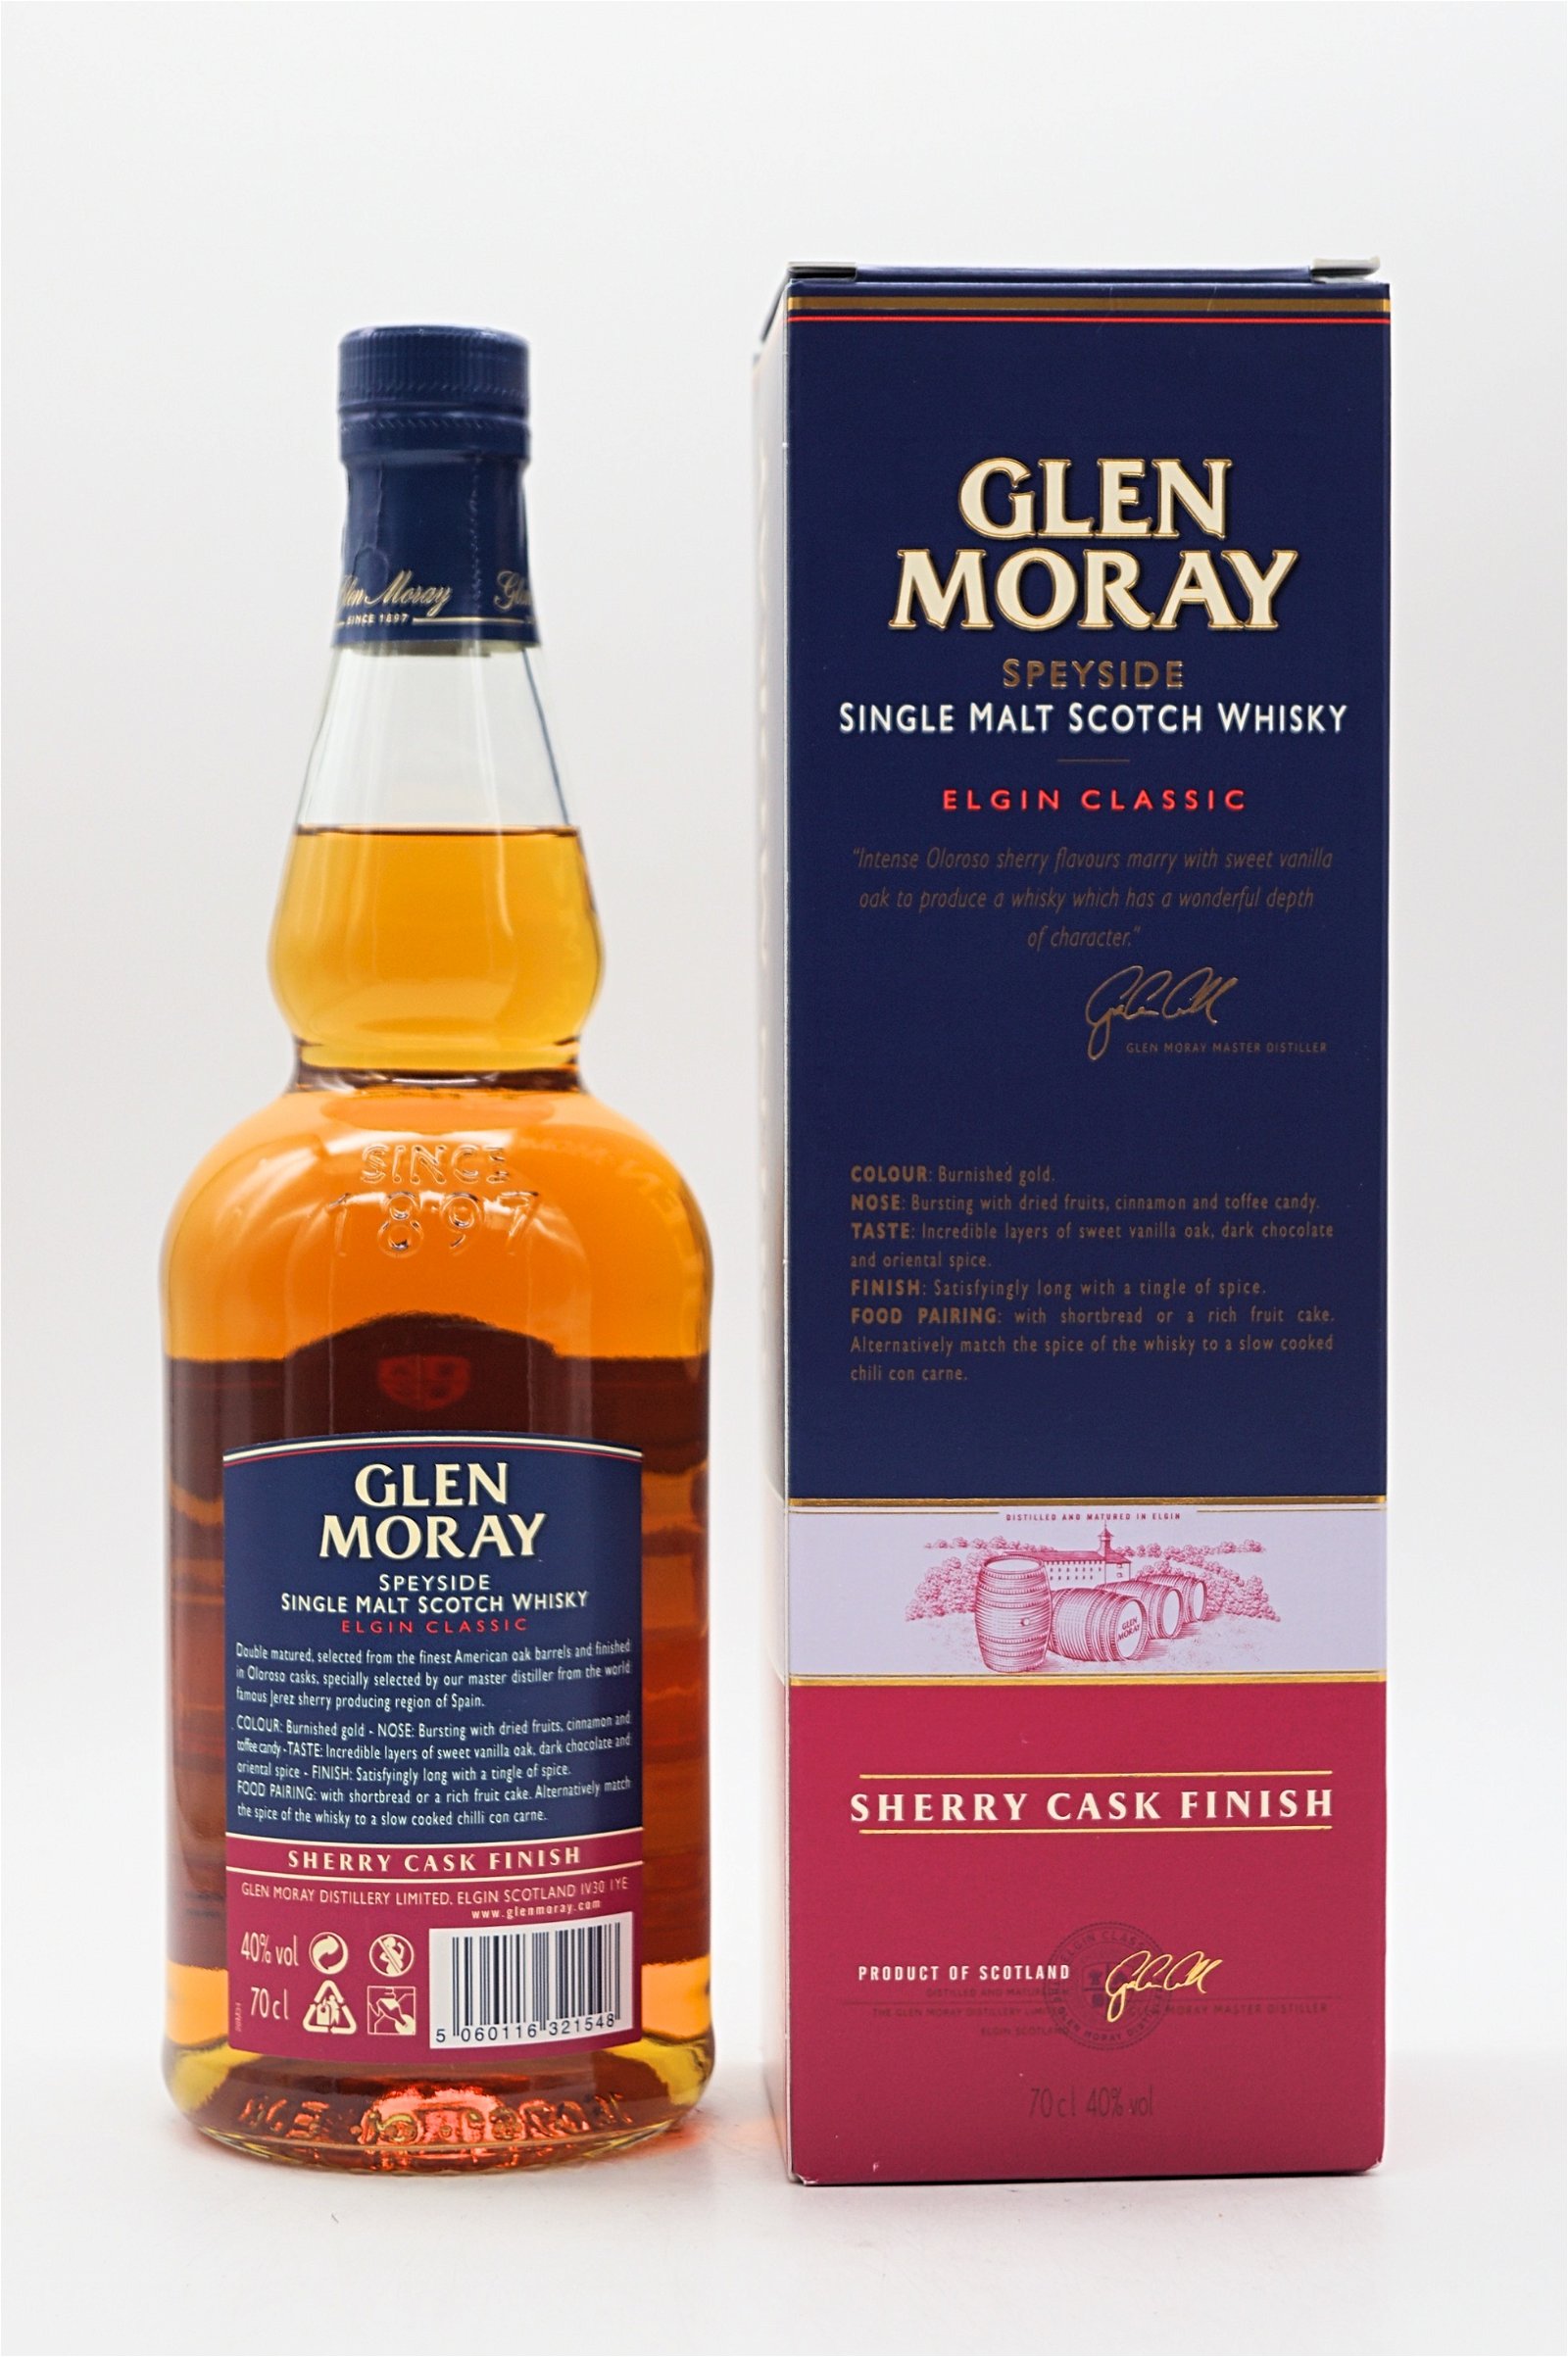 Glen Moray Elgin Classic Sherry Cask Finish Single Malt Scotch